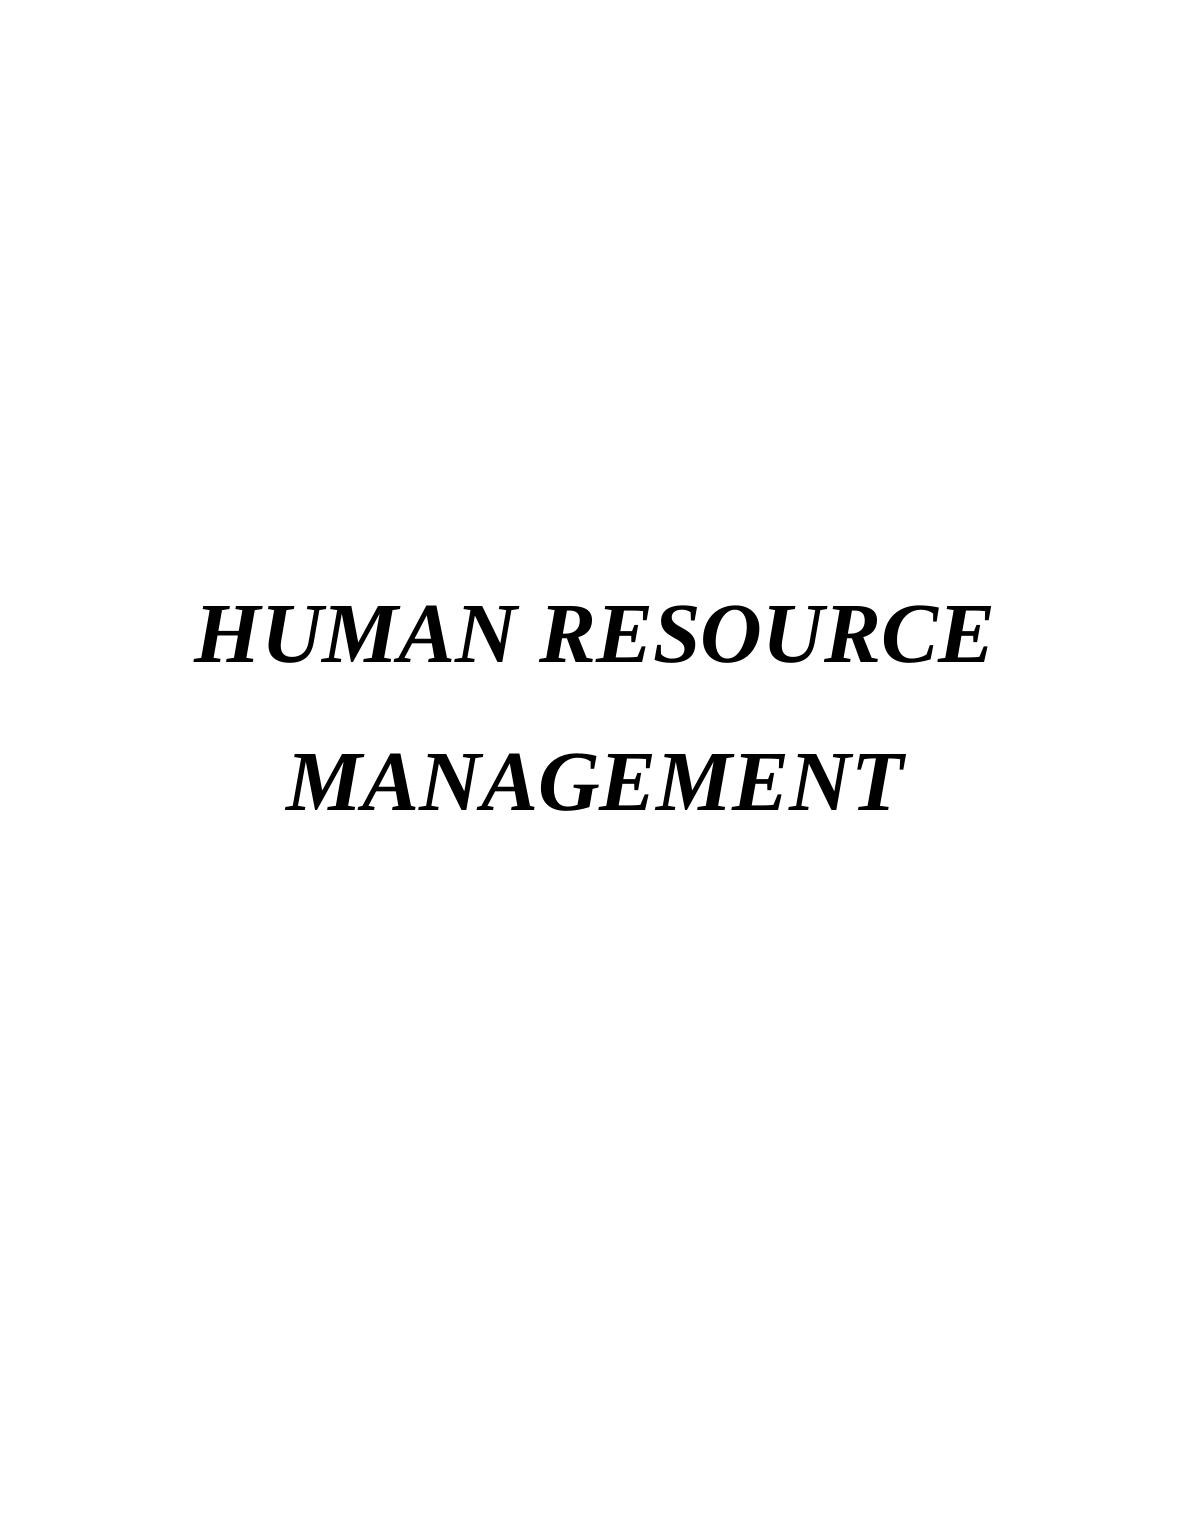 Human Resource Management Assignment - Aldi company_1